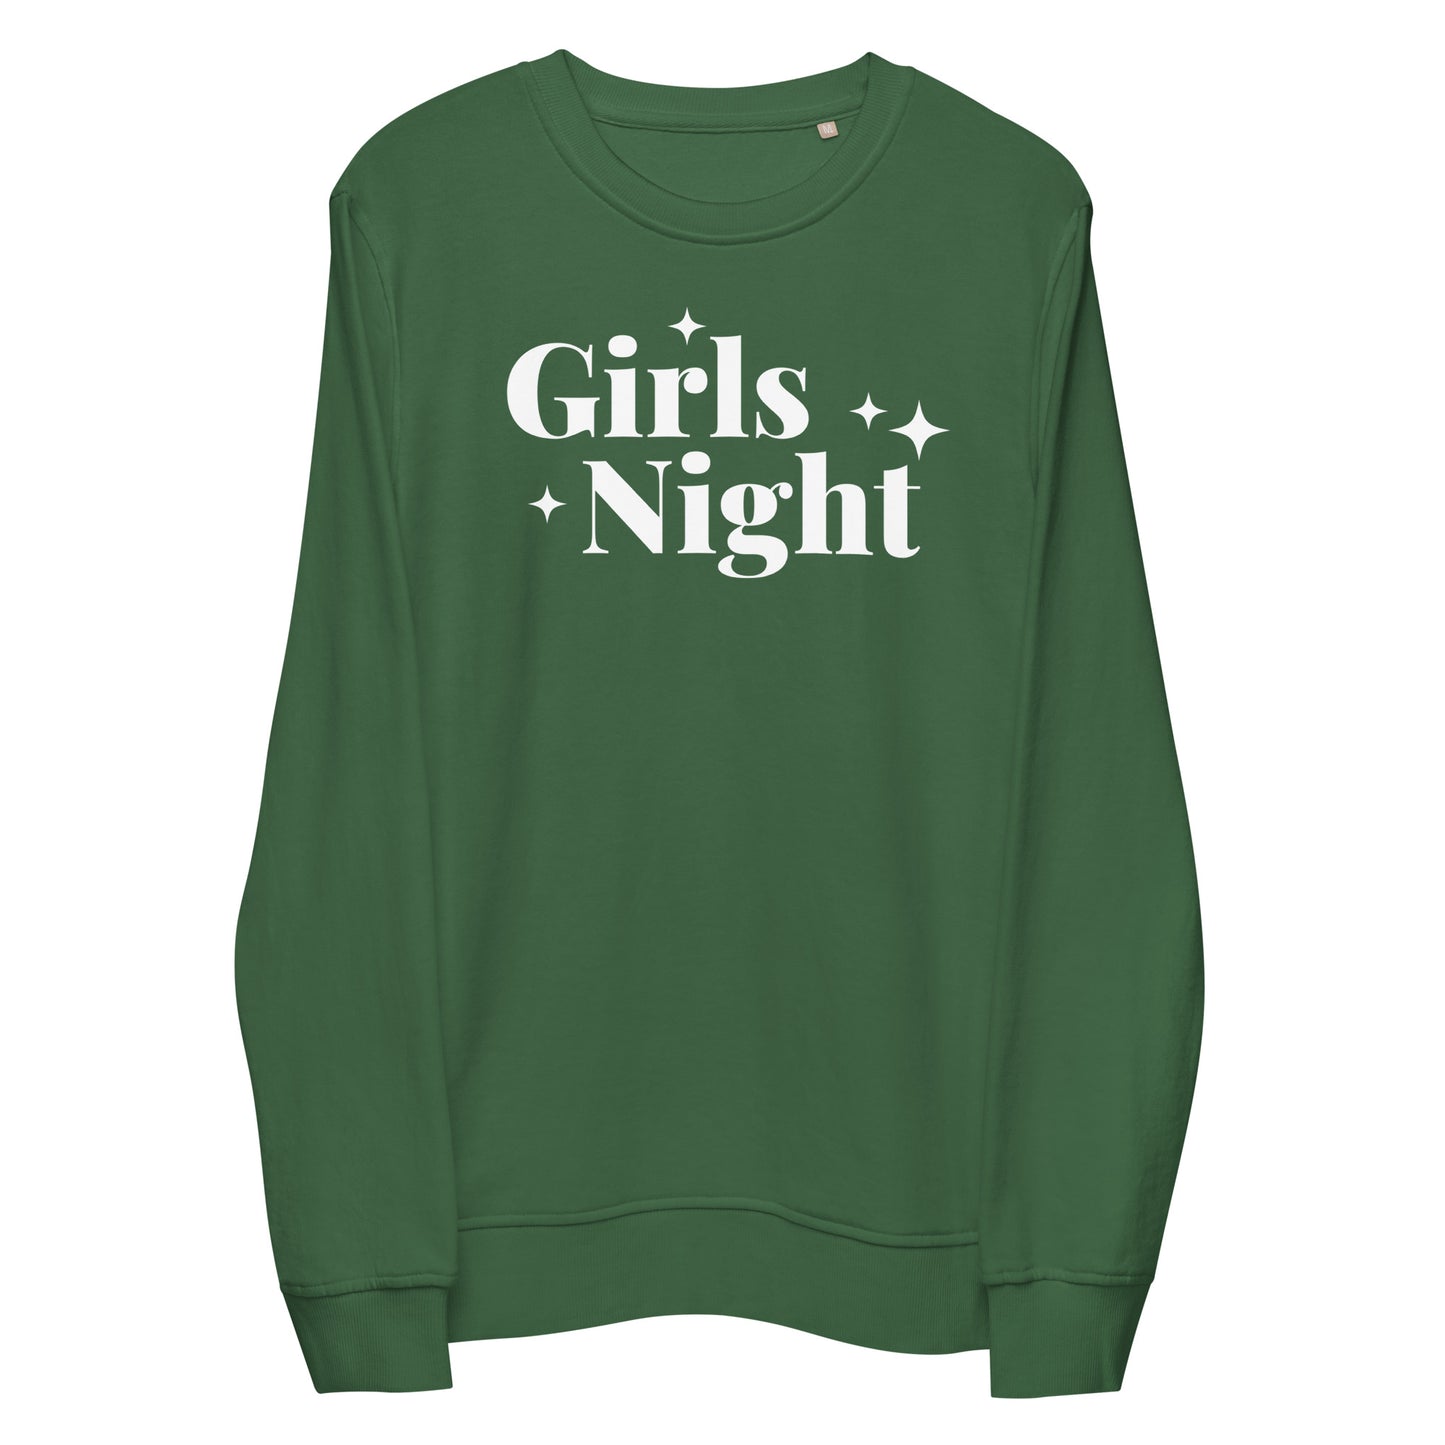 Summer Girls Night Sweatshirt in color green